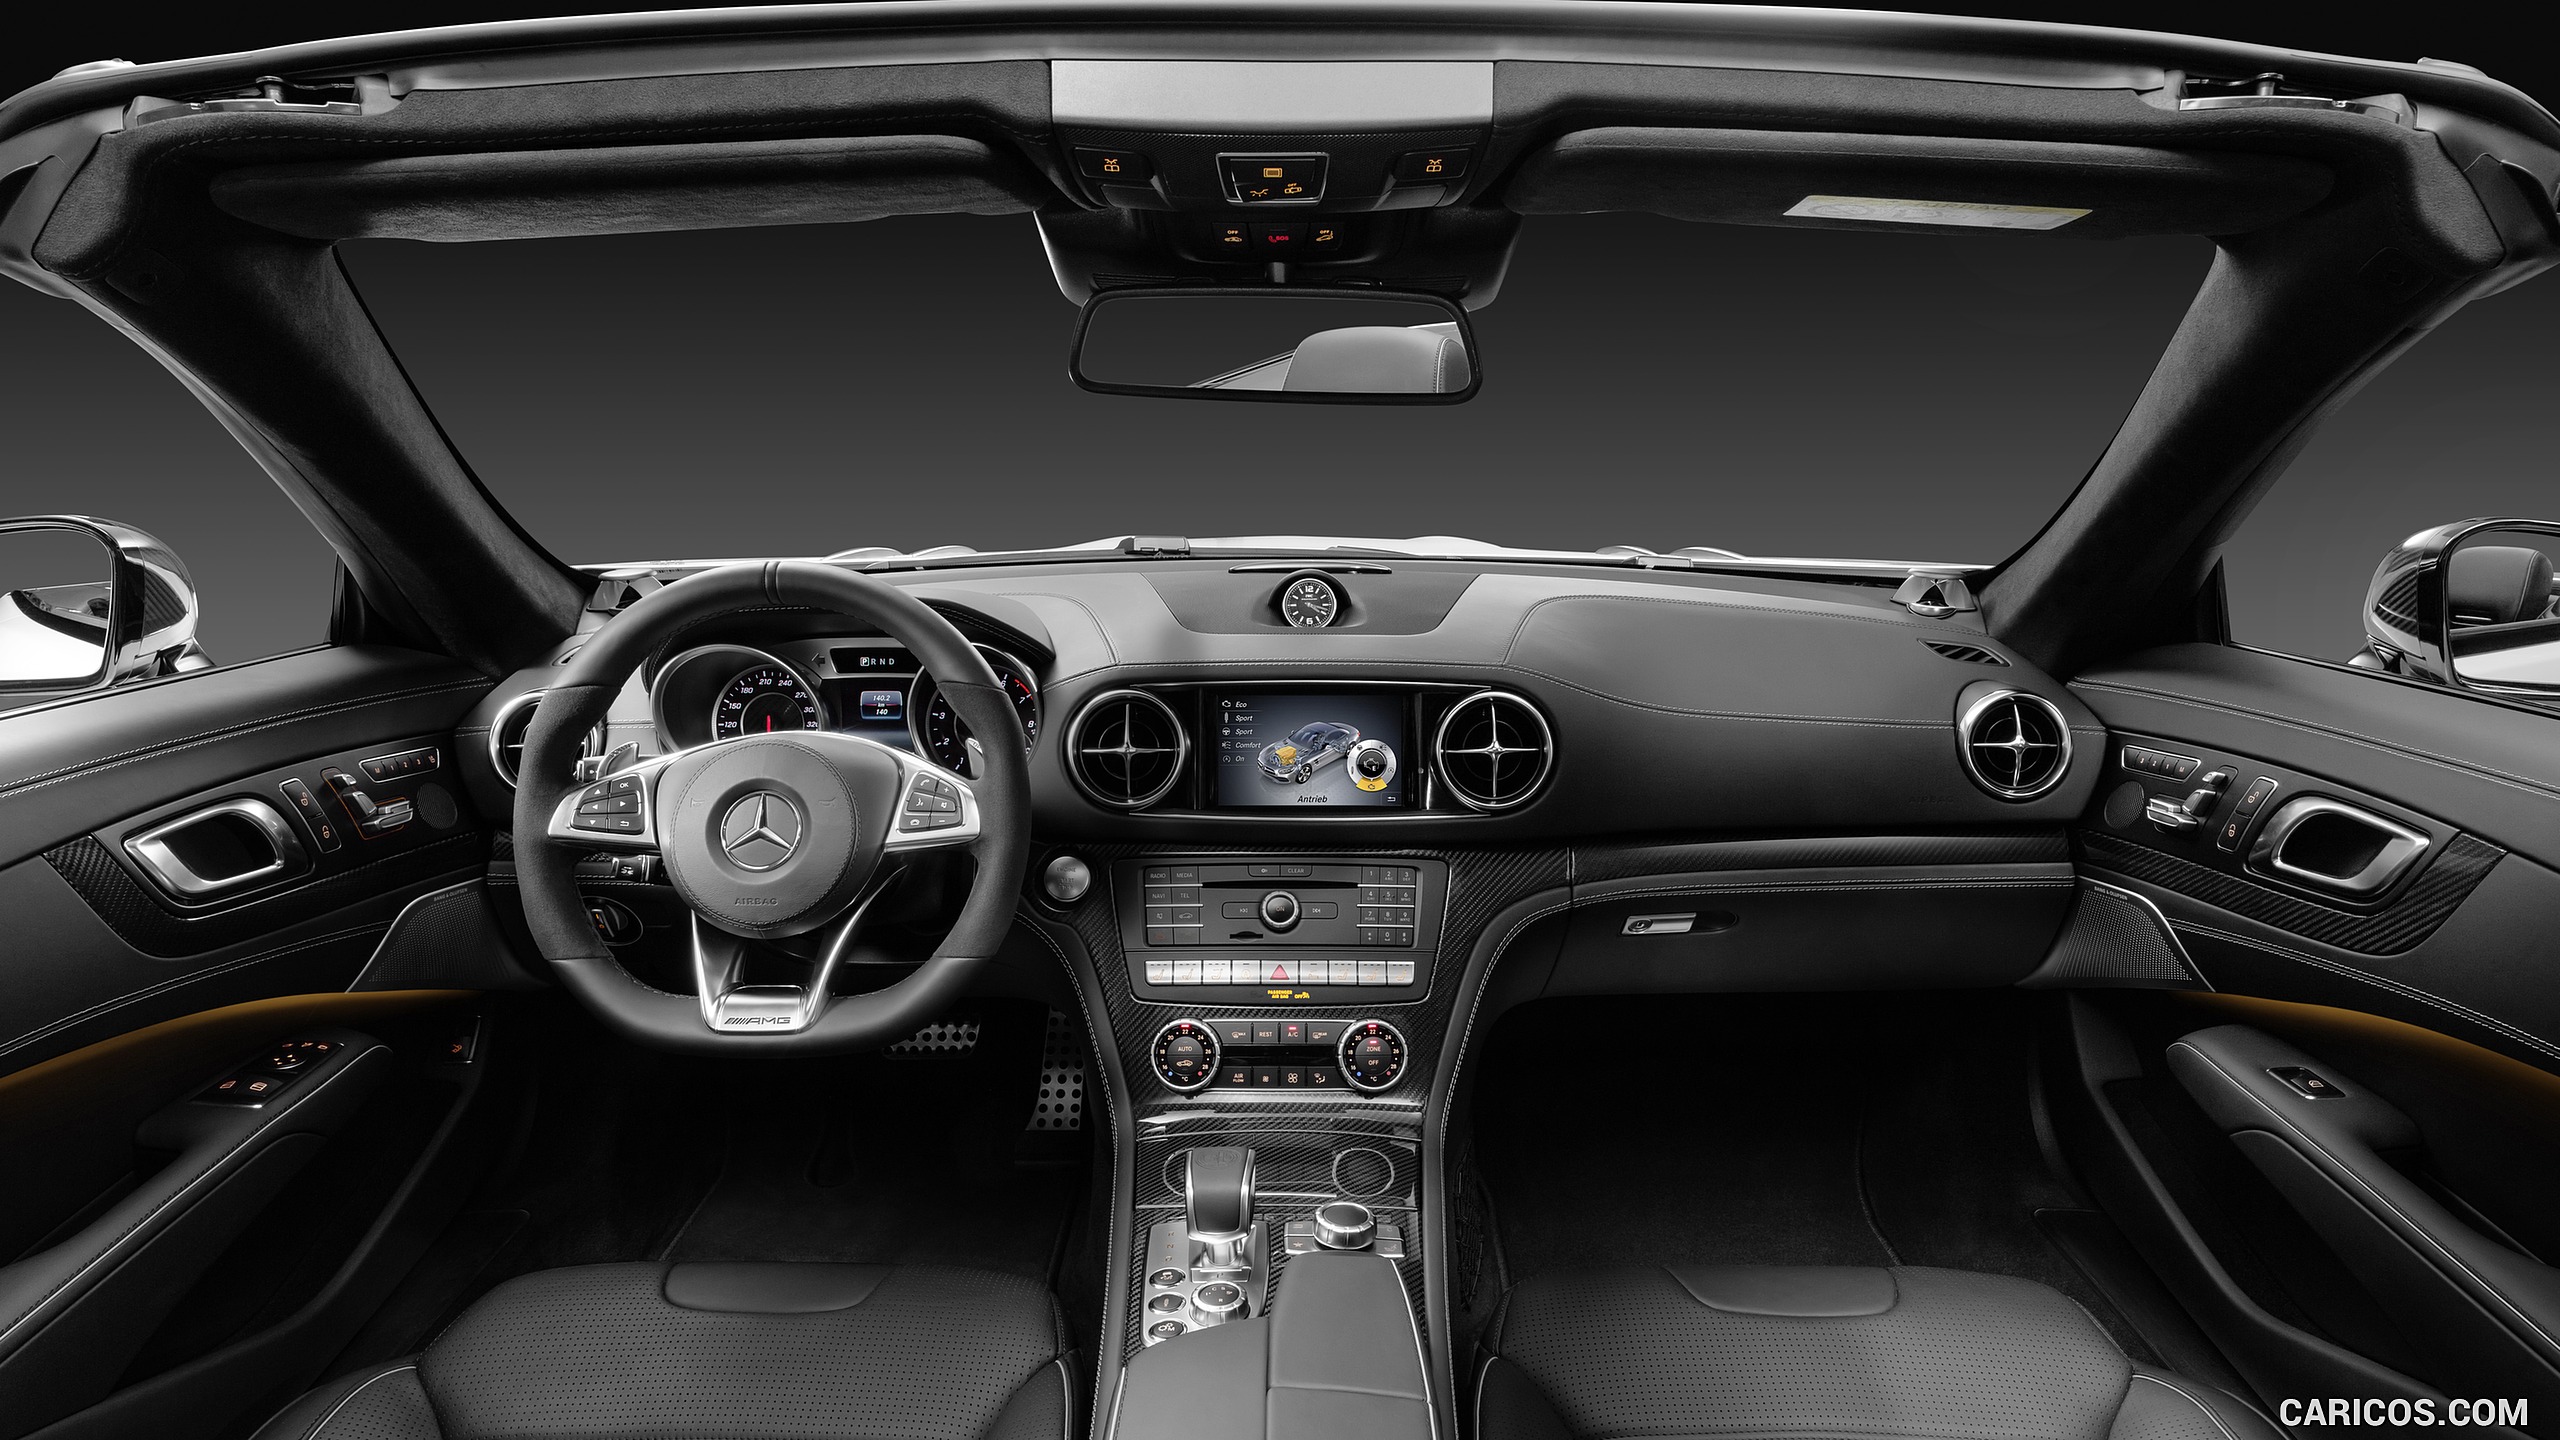 2017 Mercedes-AMG SL 63 - Leather Black Interior with AMG Carbon Trim - Interior, Cockpit, #22 of 39